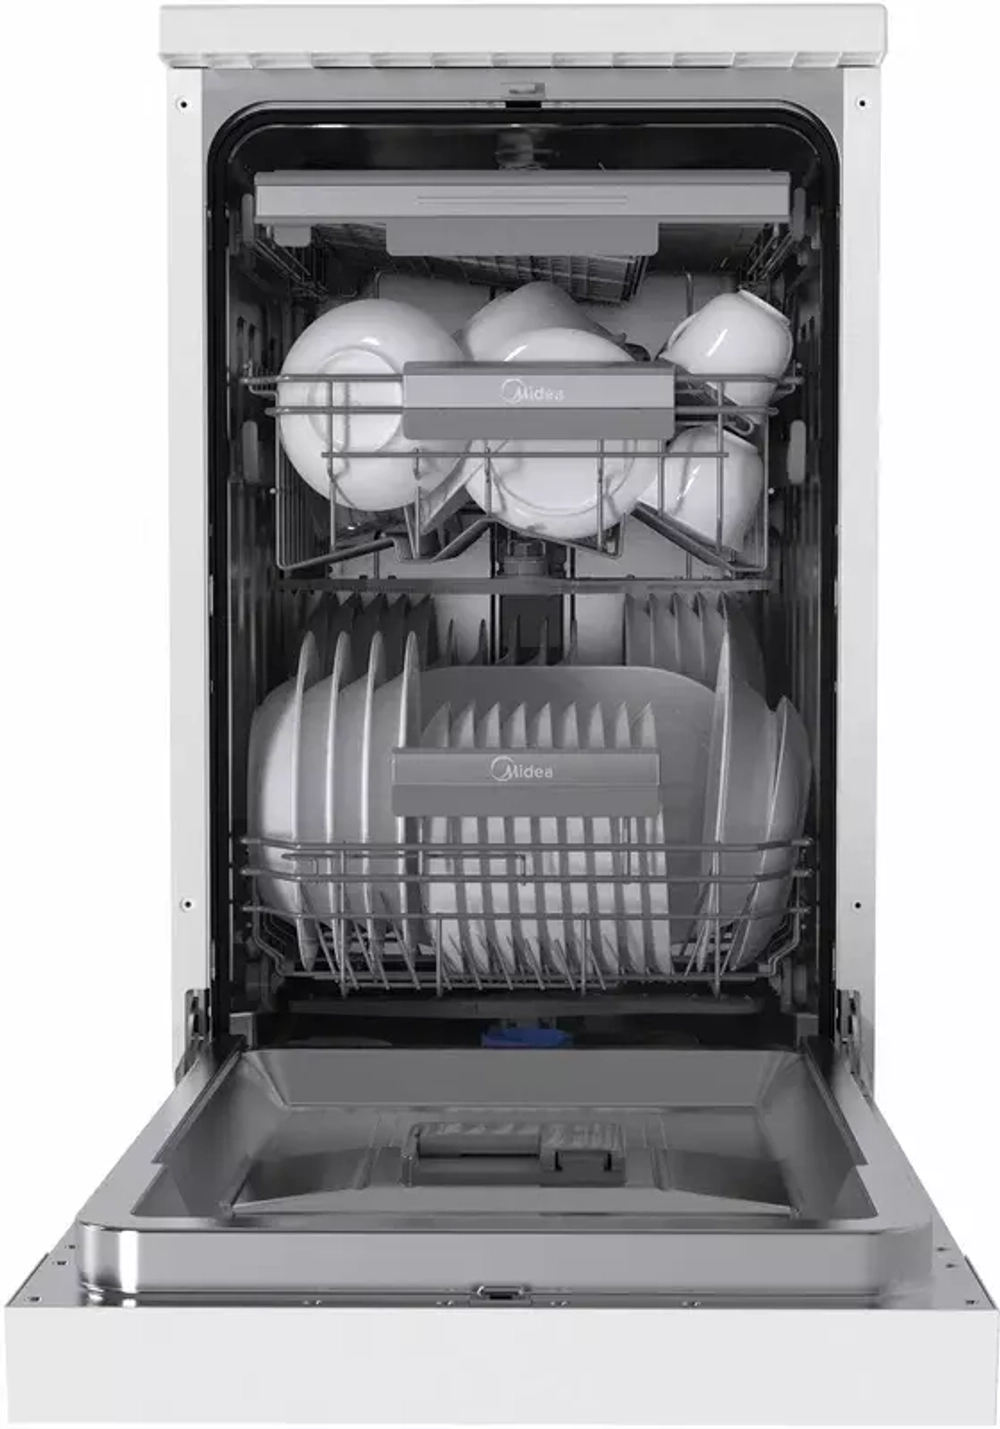 Посудомоечная машина (45 см) Midea MFD45S160Wi (MLN)